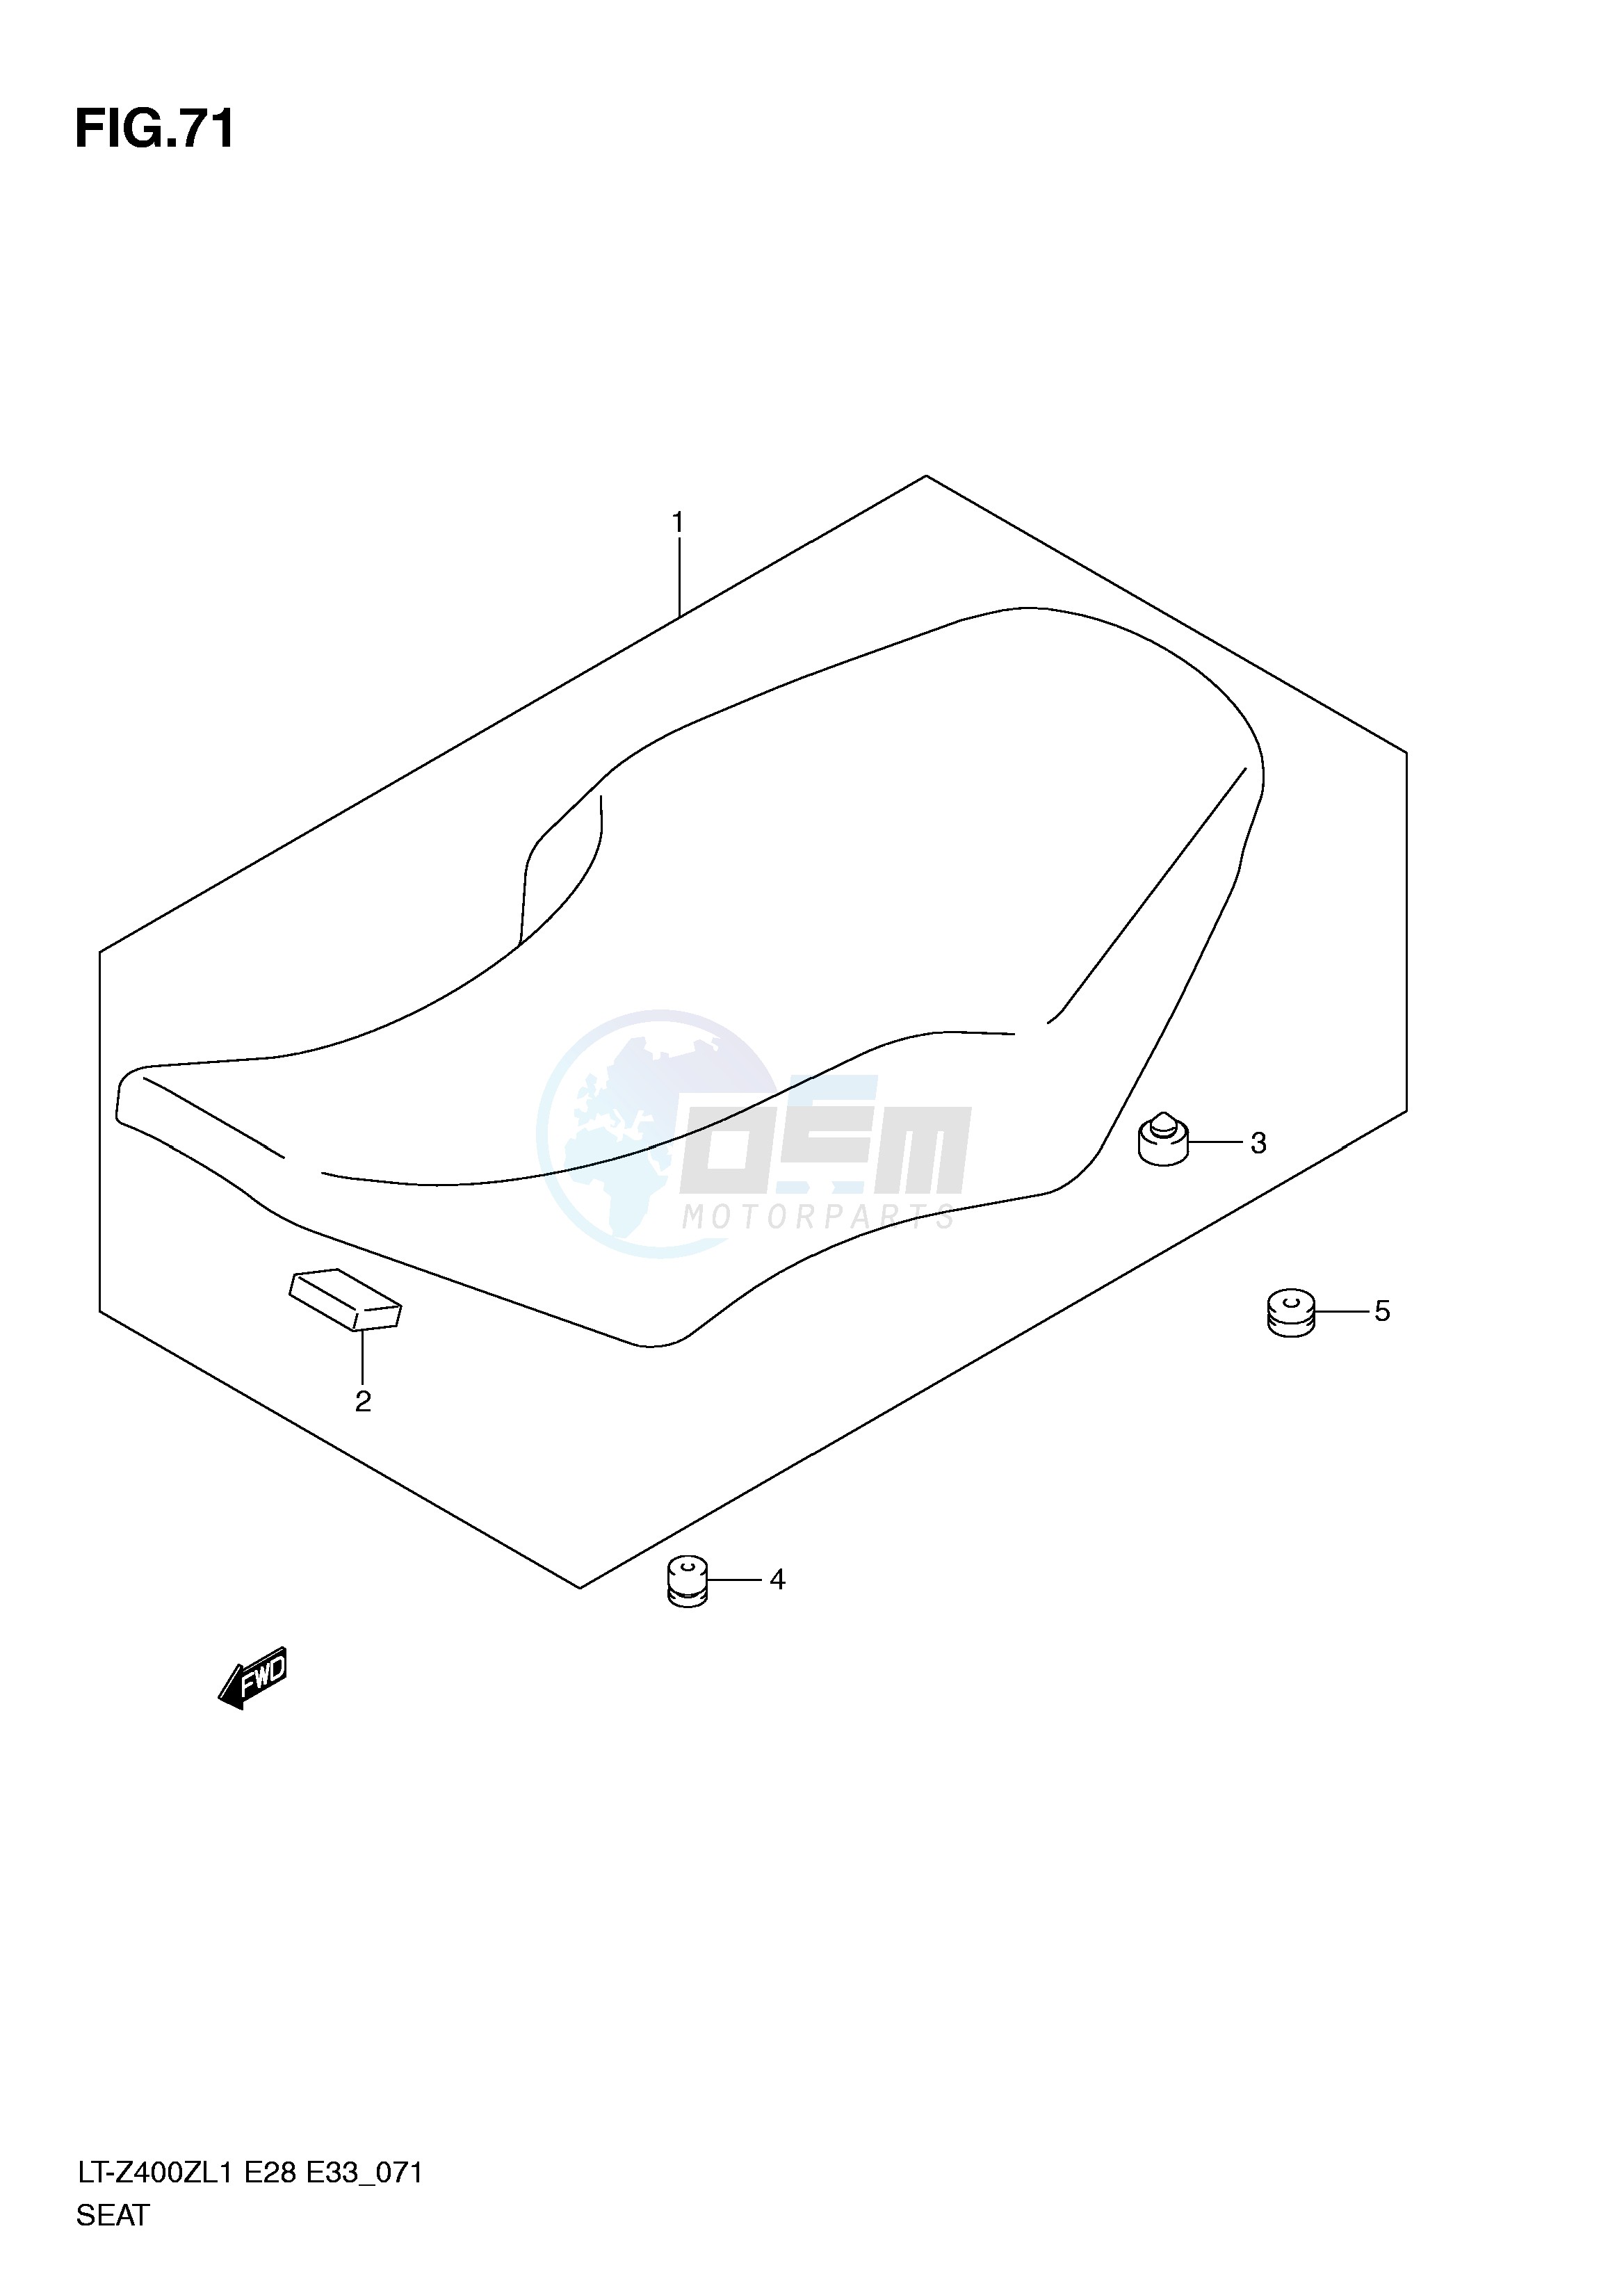 SEAT (LT-Z400ZL1 E33) blueprint